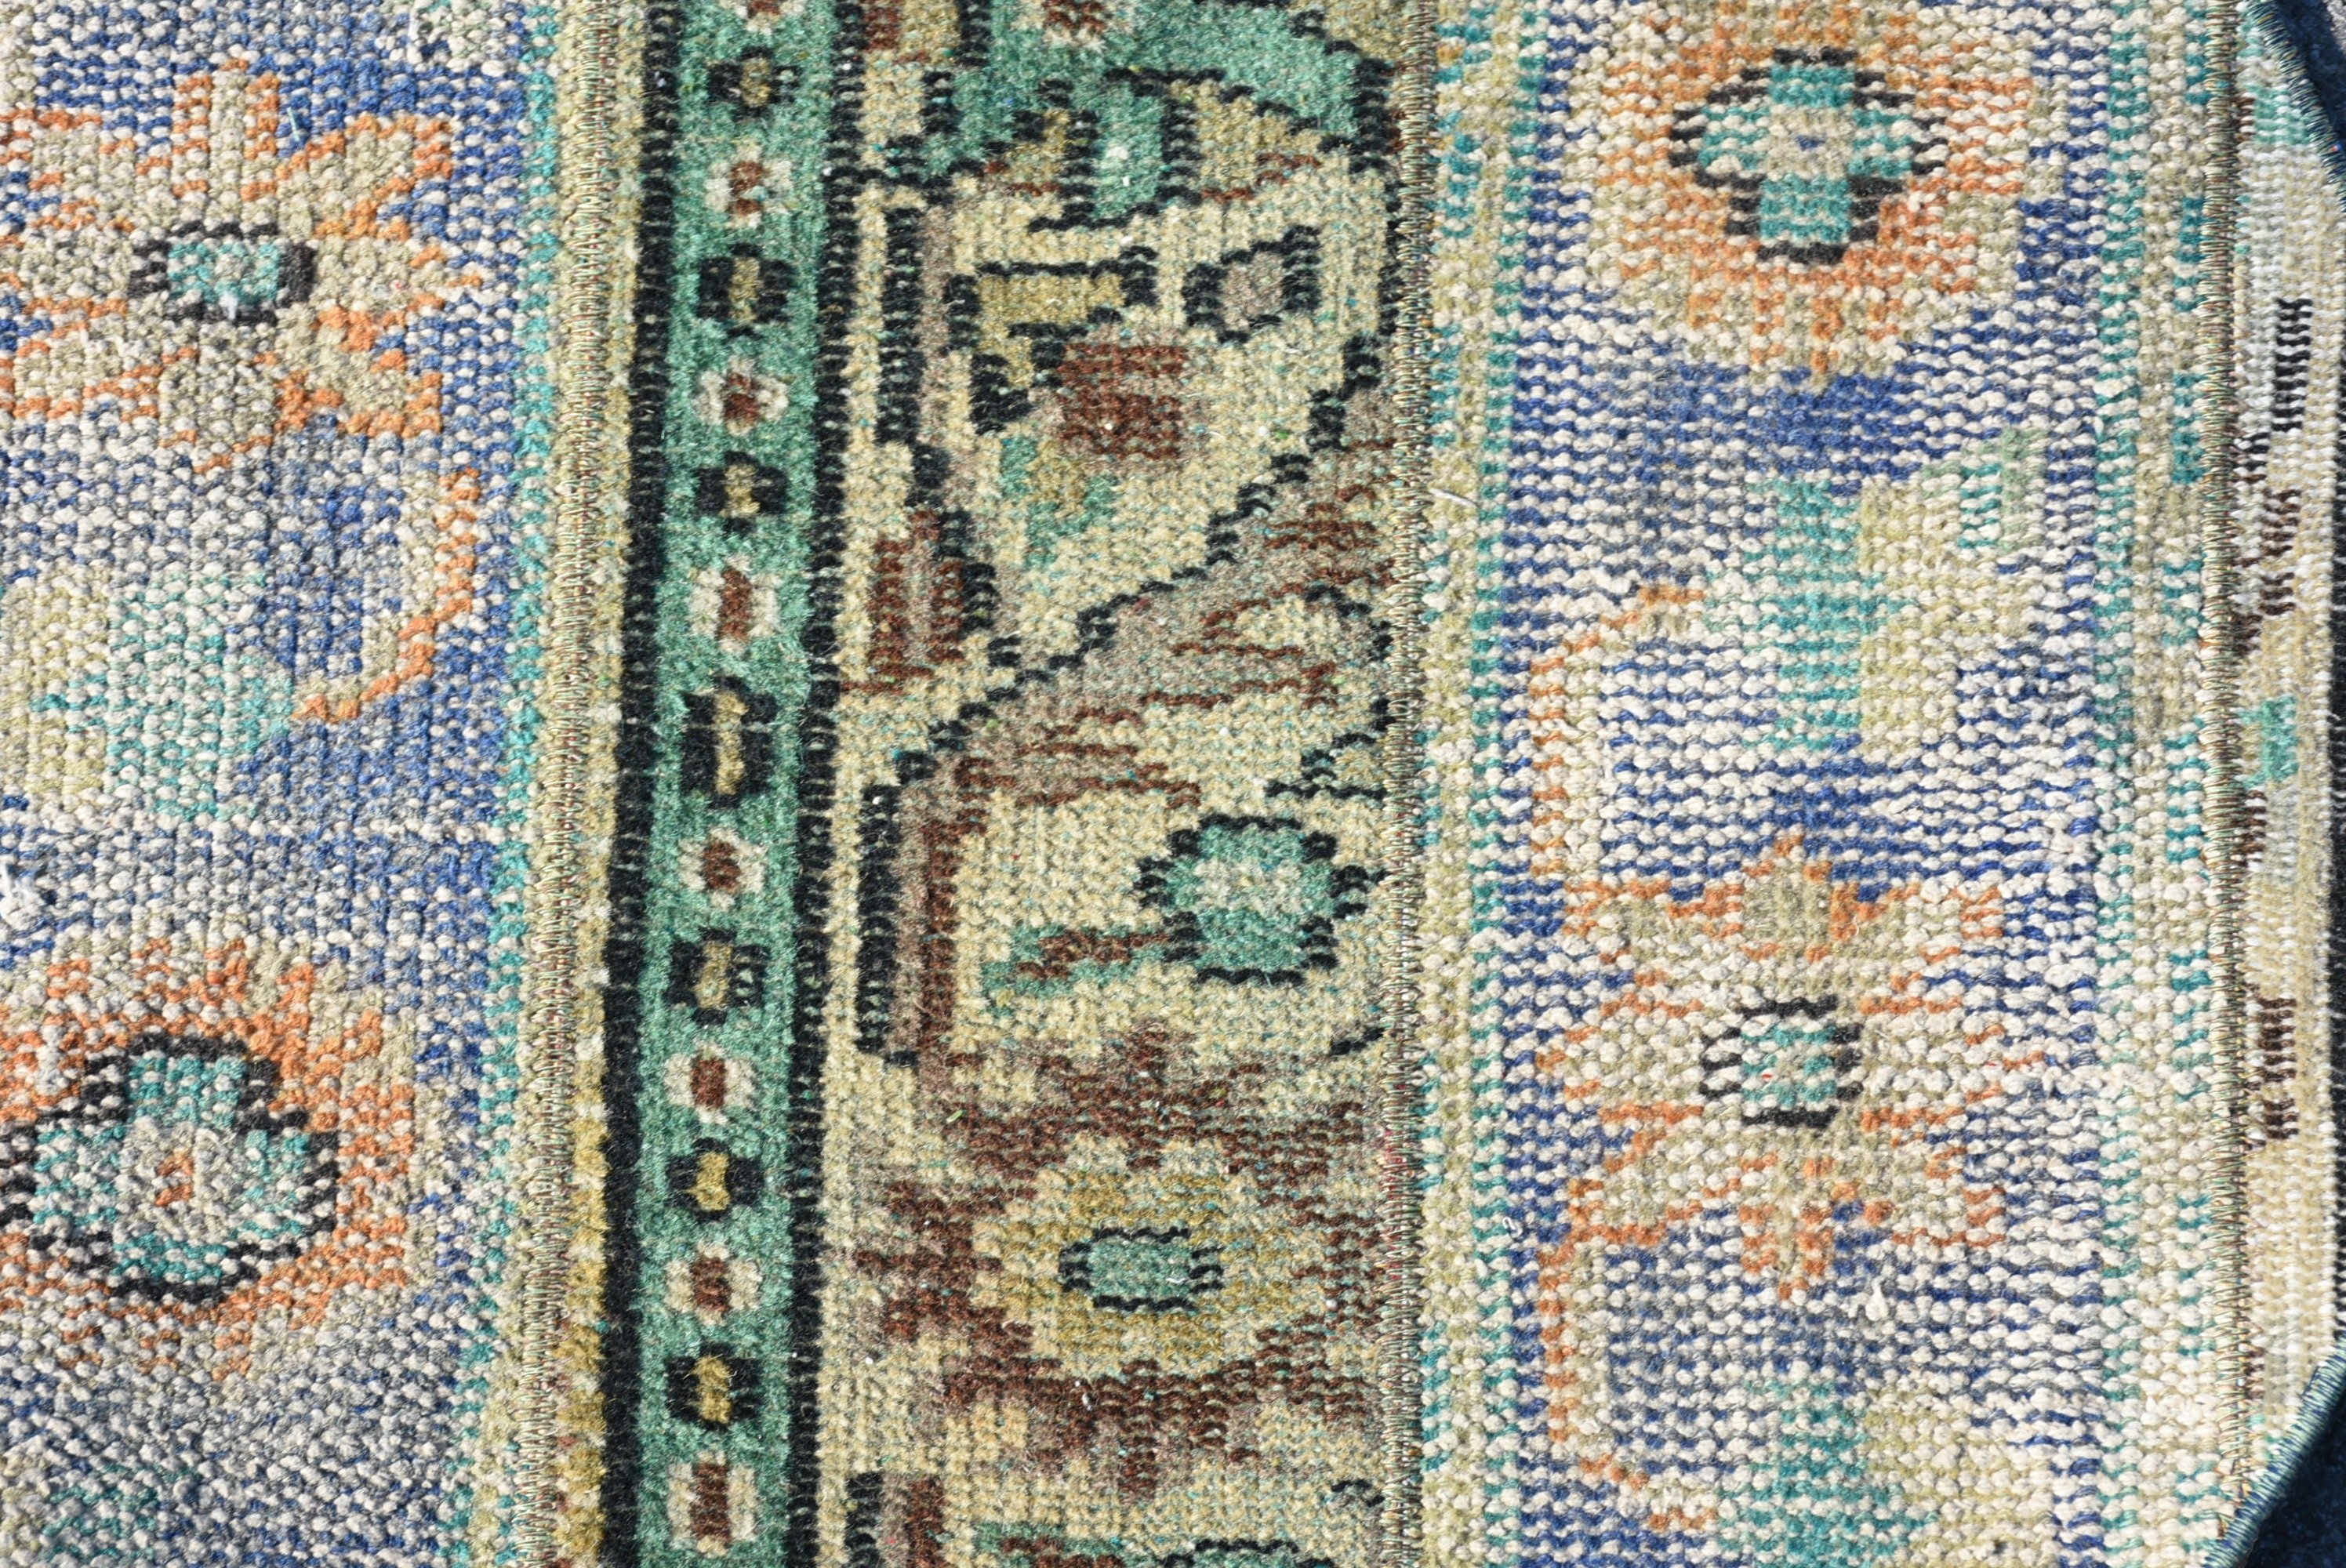 Antique Rugs, Kitchen Rugs, Nursery Rugs, Handwoven Rug, Green  2.2x2.2 ft Small Rug, Anatolian Rug, Turkish Rug, Vintage Rugs